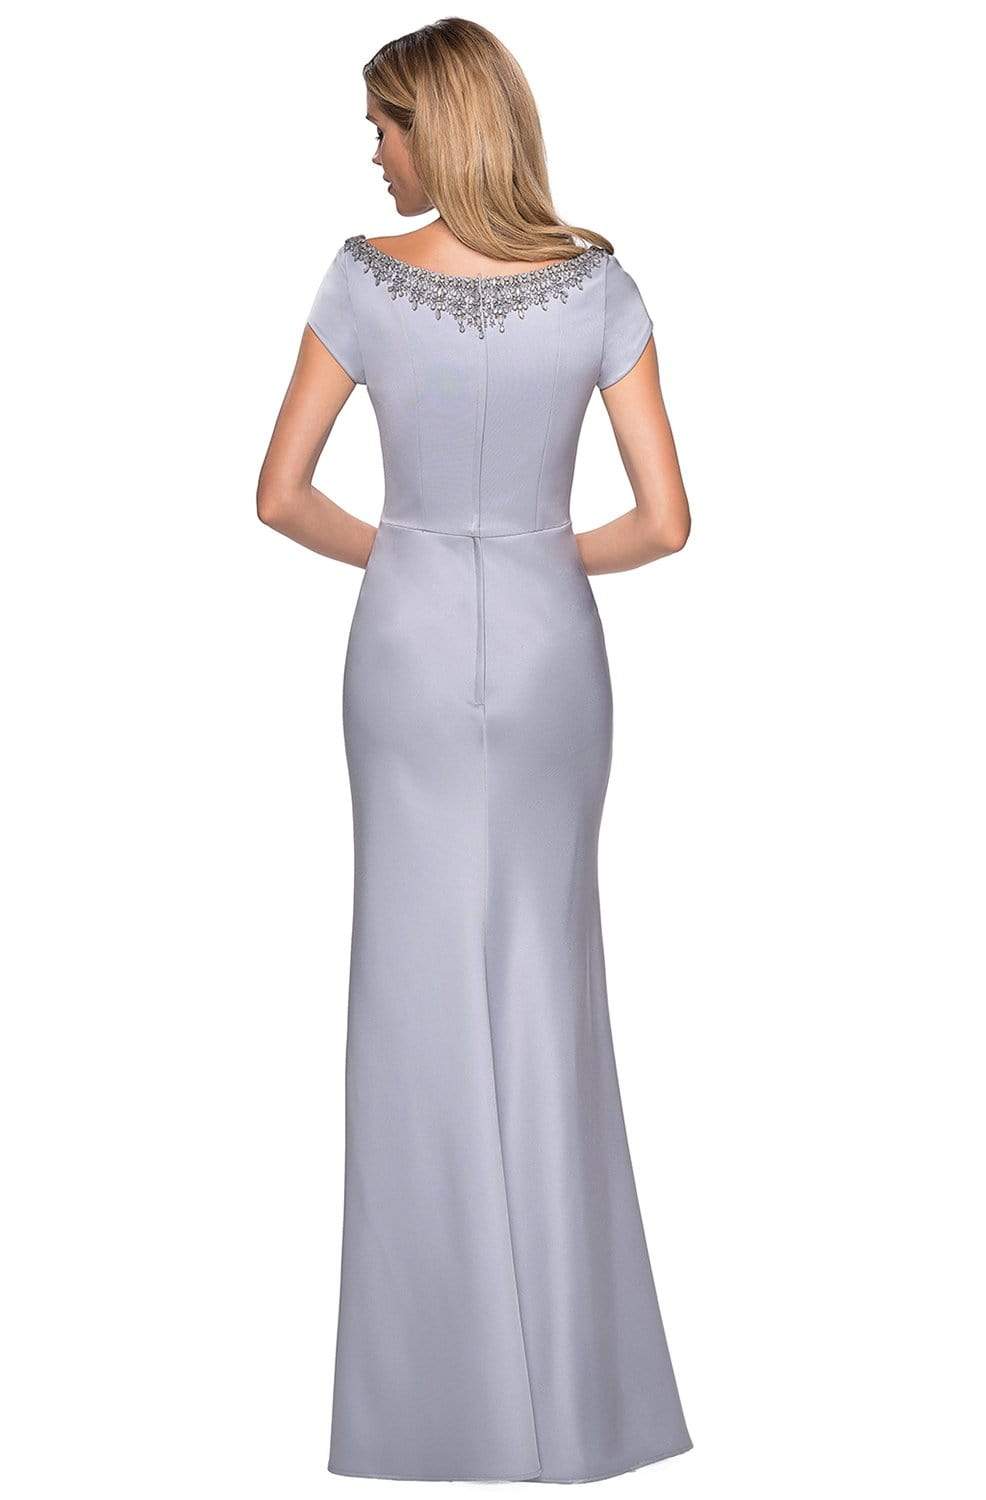 La Femme - 27244 Short Sleeve Bejeweled Scoop Neck Gown Mother of the Bride Dresses